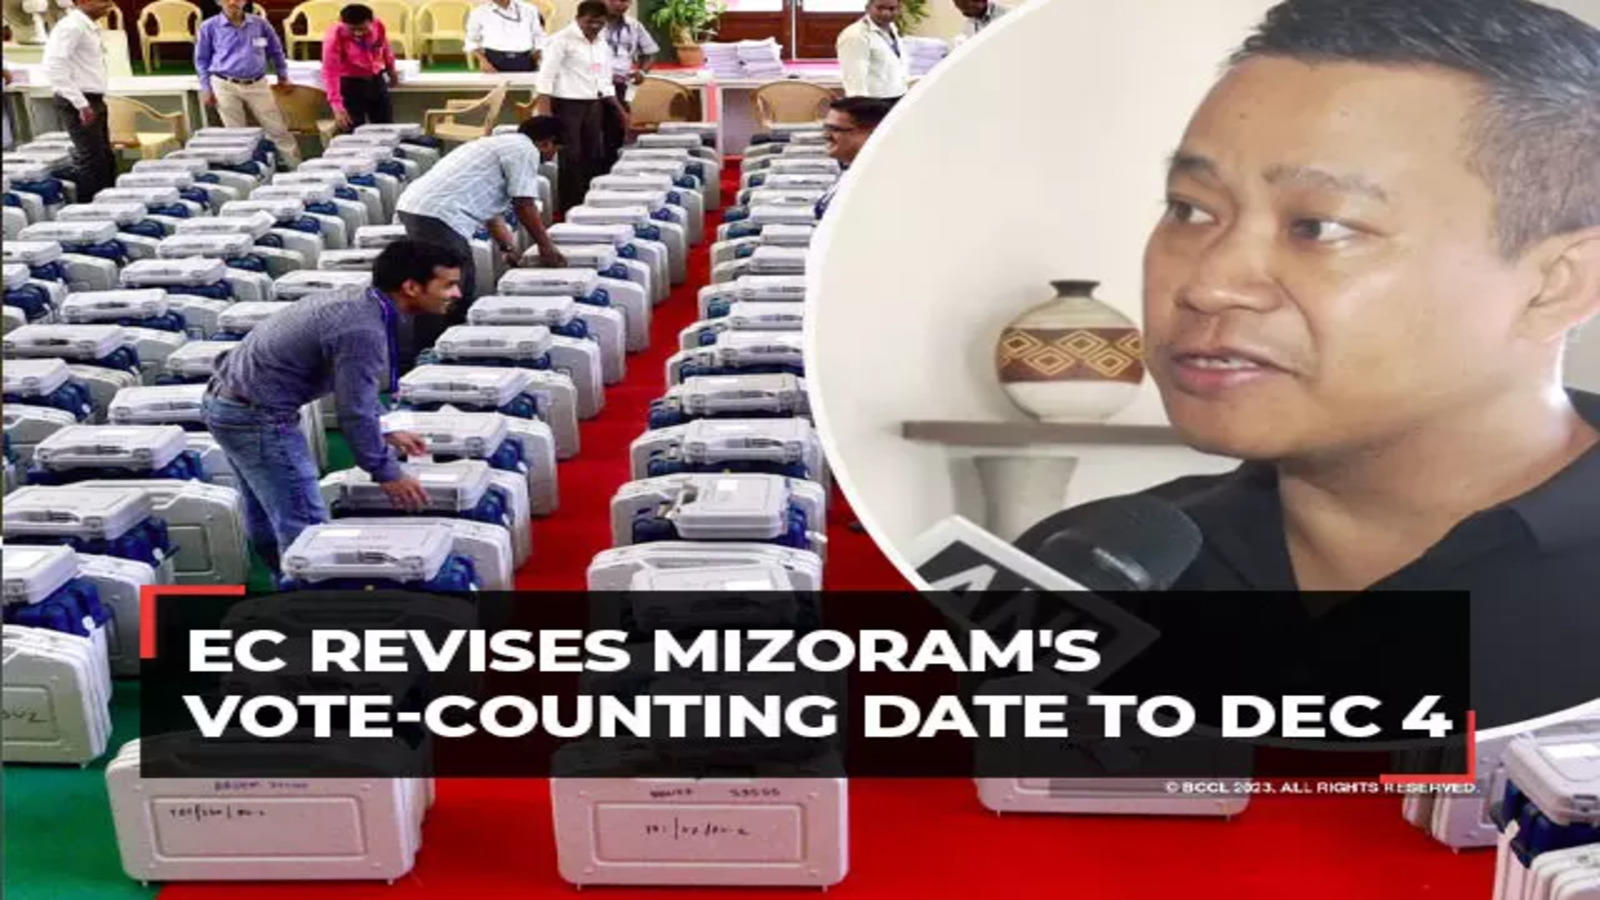 Mizoram election results: కొనసాగుతోన్న మిజోరాం ఎన్నికల కౌంటింగ్.. కాసేపట్లో ఫలితాలు